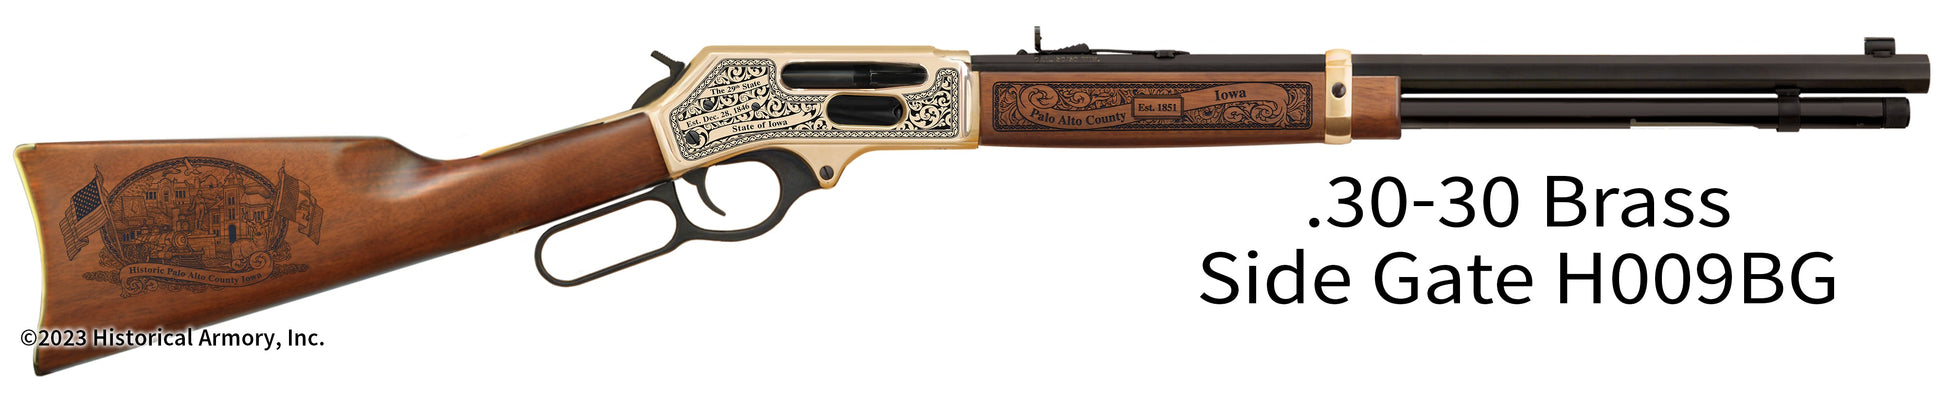 Palo Alto County Iowa Engraved Henry .30-30 Brass Side Gate Rifle